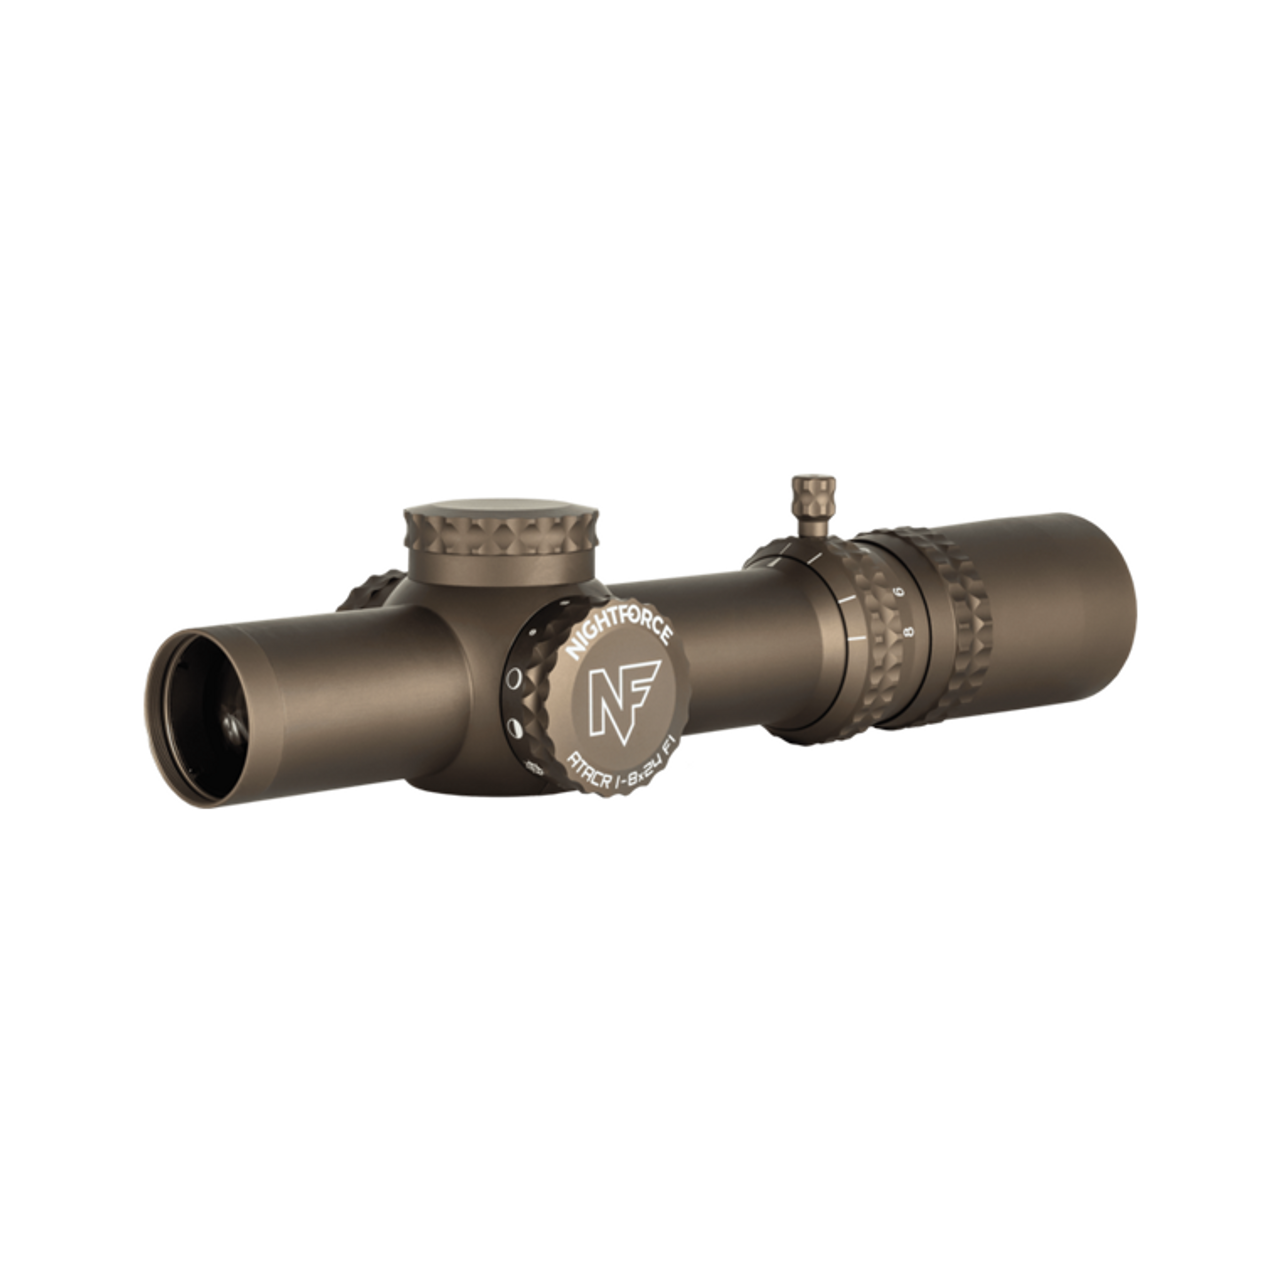 Nightforce ATACR 1-8x24 F1 Riflescope - FC-DMx